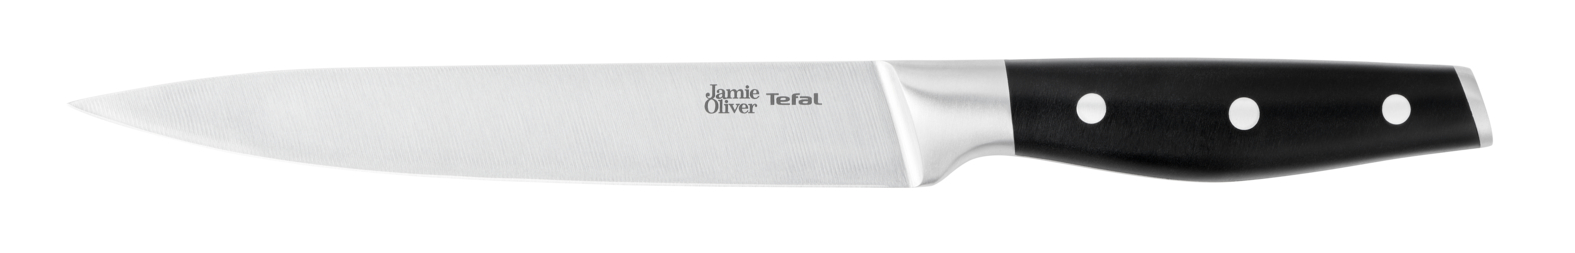 Универсальный нож Jamie Oliver 20 cм K2670244 нож сантоку jamie oliver 18 см k2671844